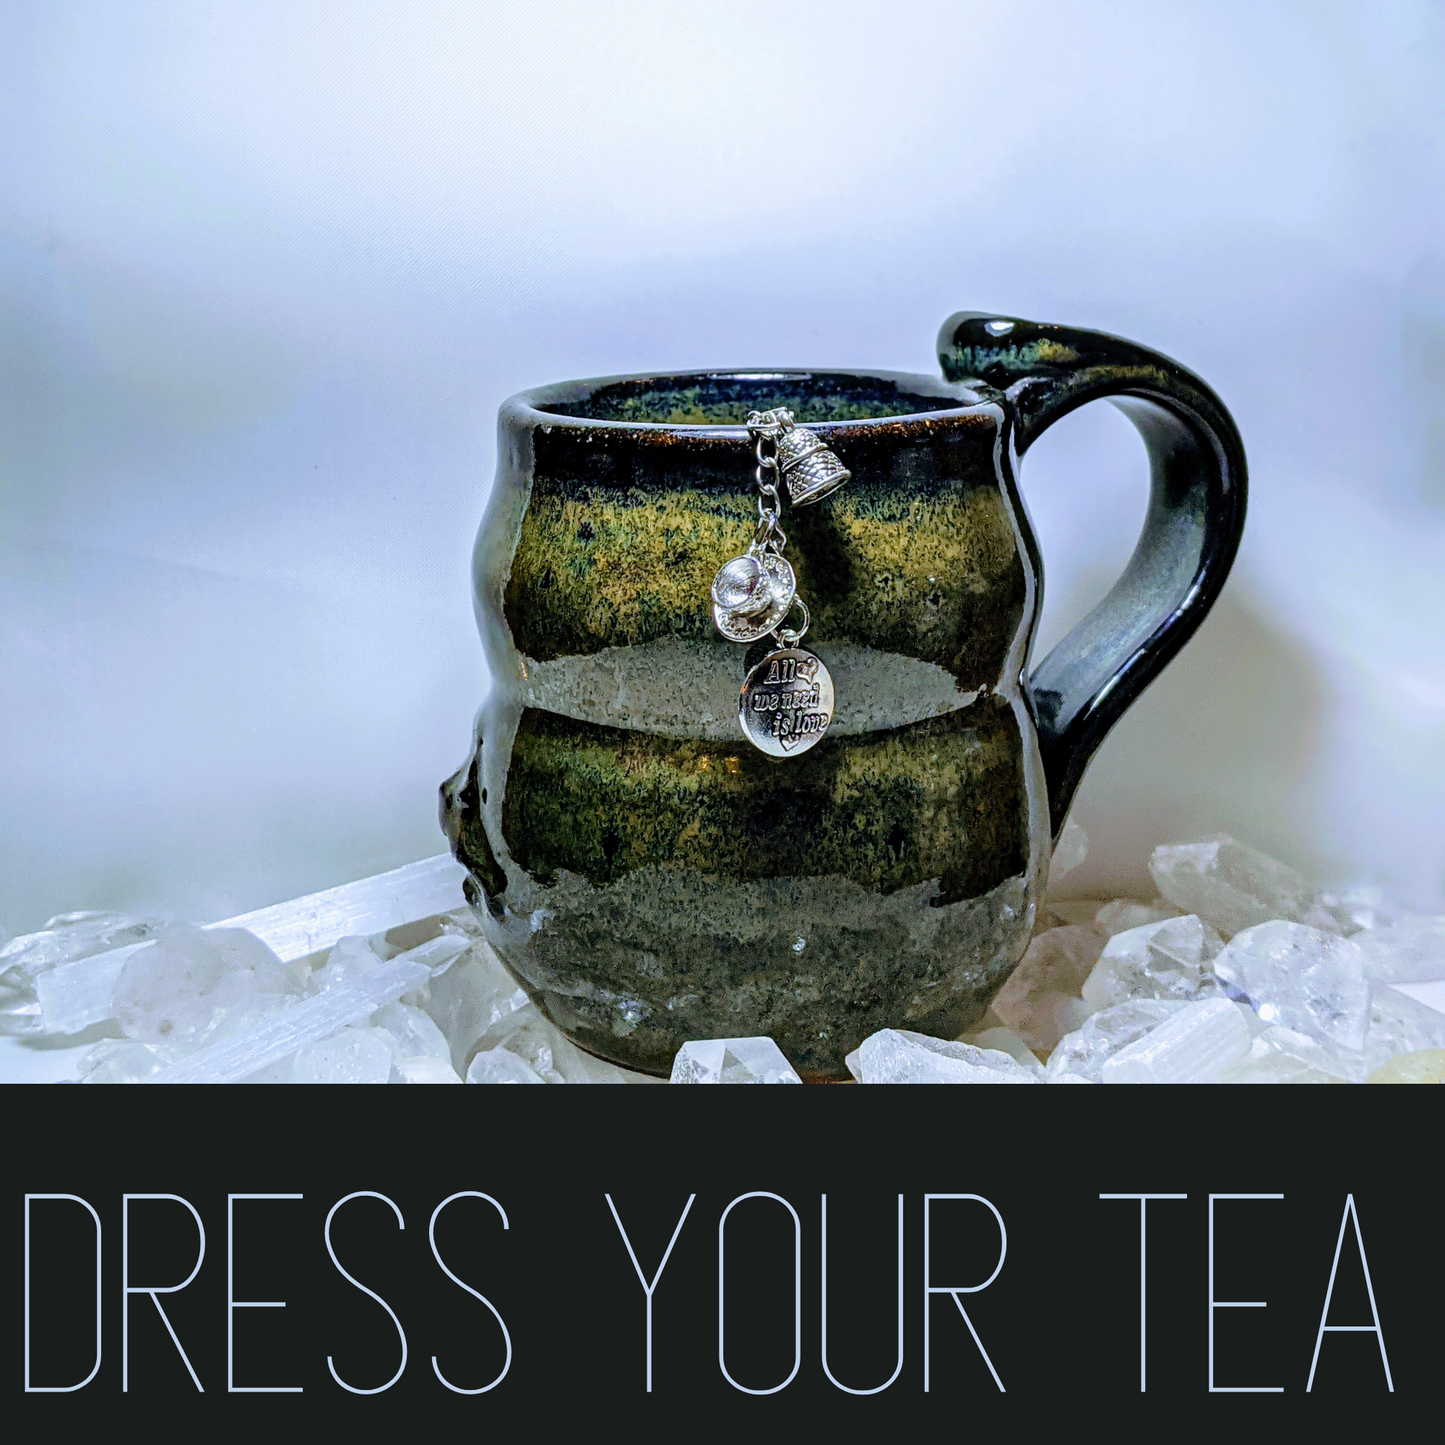 Dress Your Tea Teabling (Grandma's tea infusion charm)